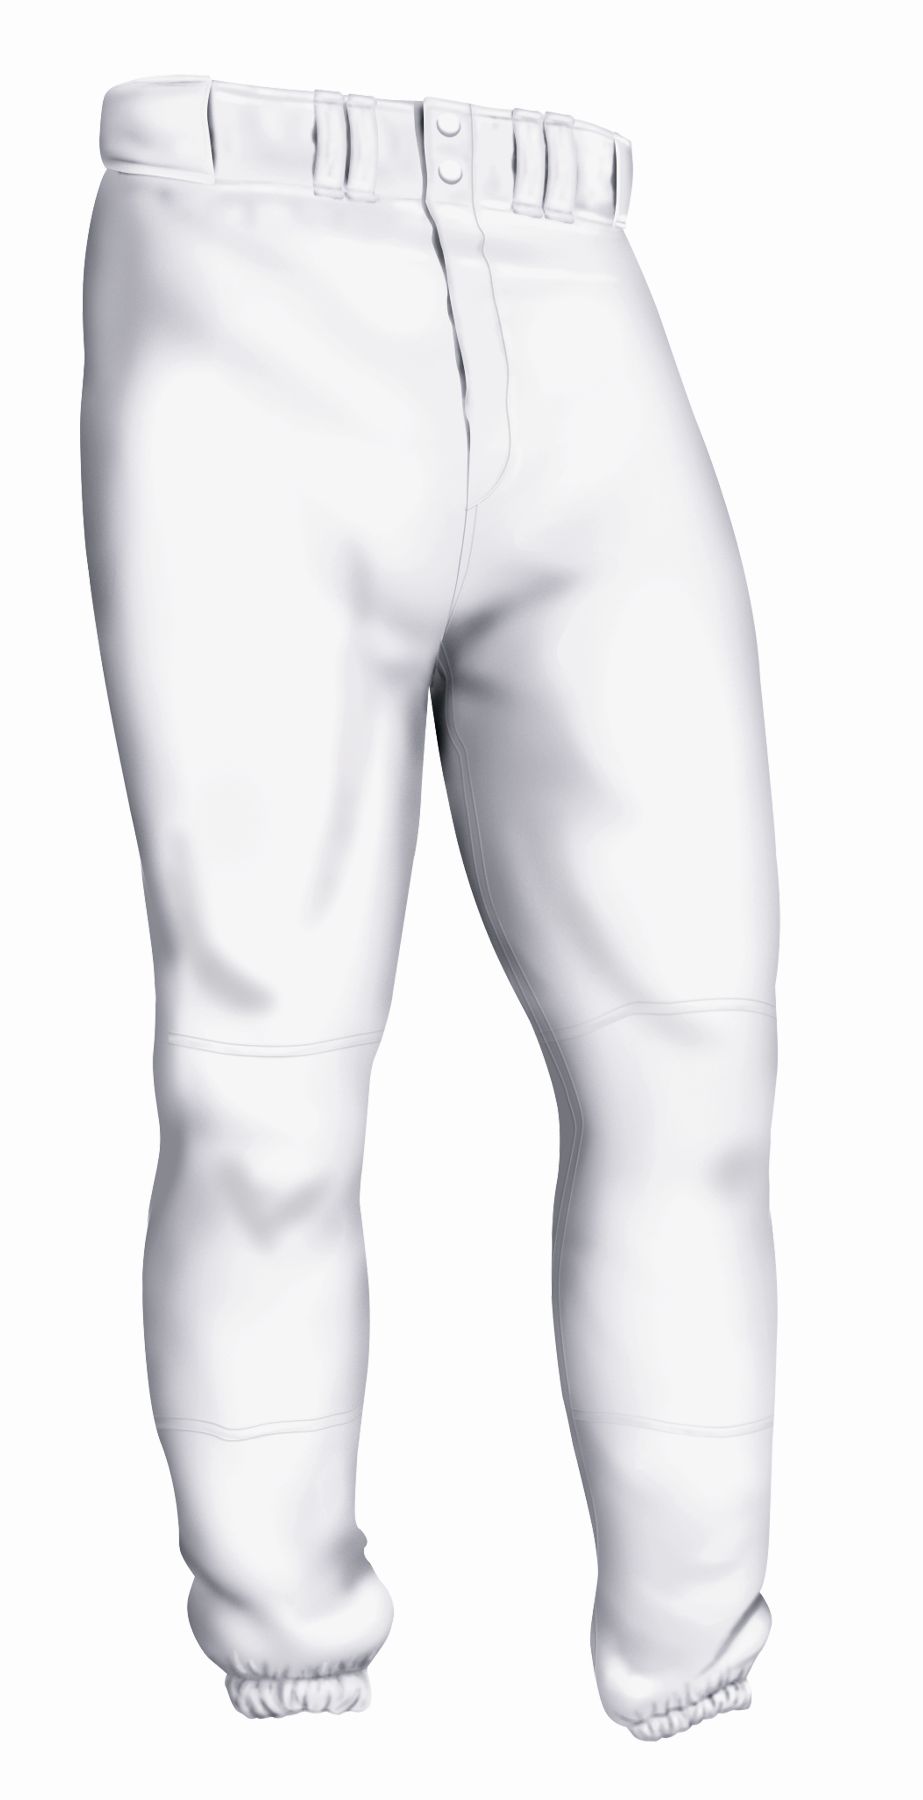 Easton Youth Baseball Pant - White XS